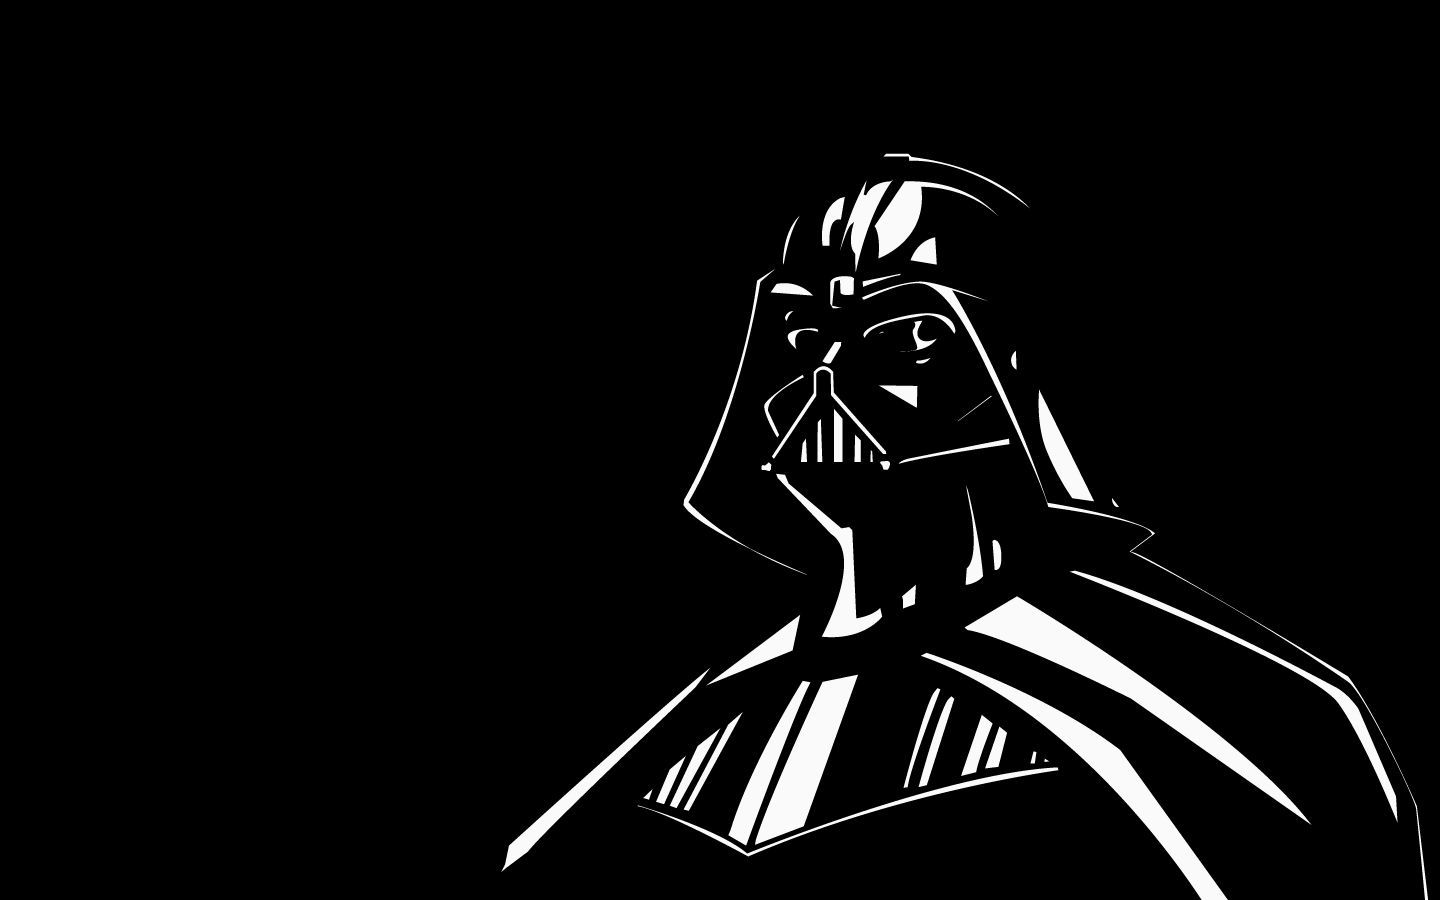 Star Wars Darth Vader wallpaper 1440x900 60443 WallpaperUP